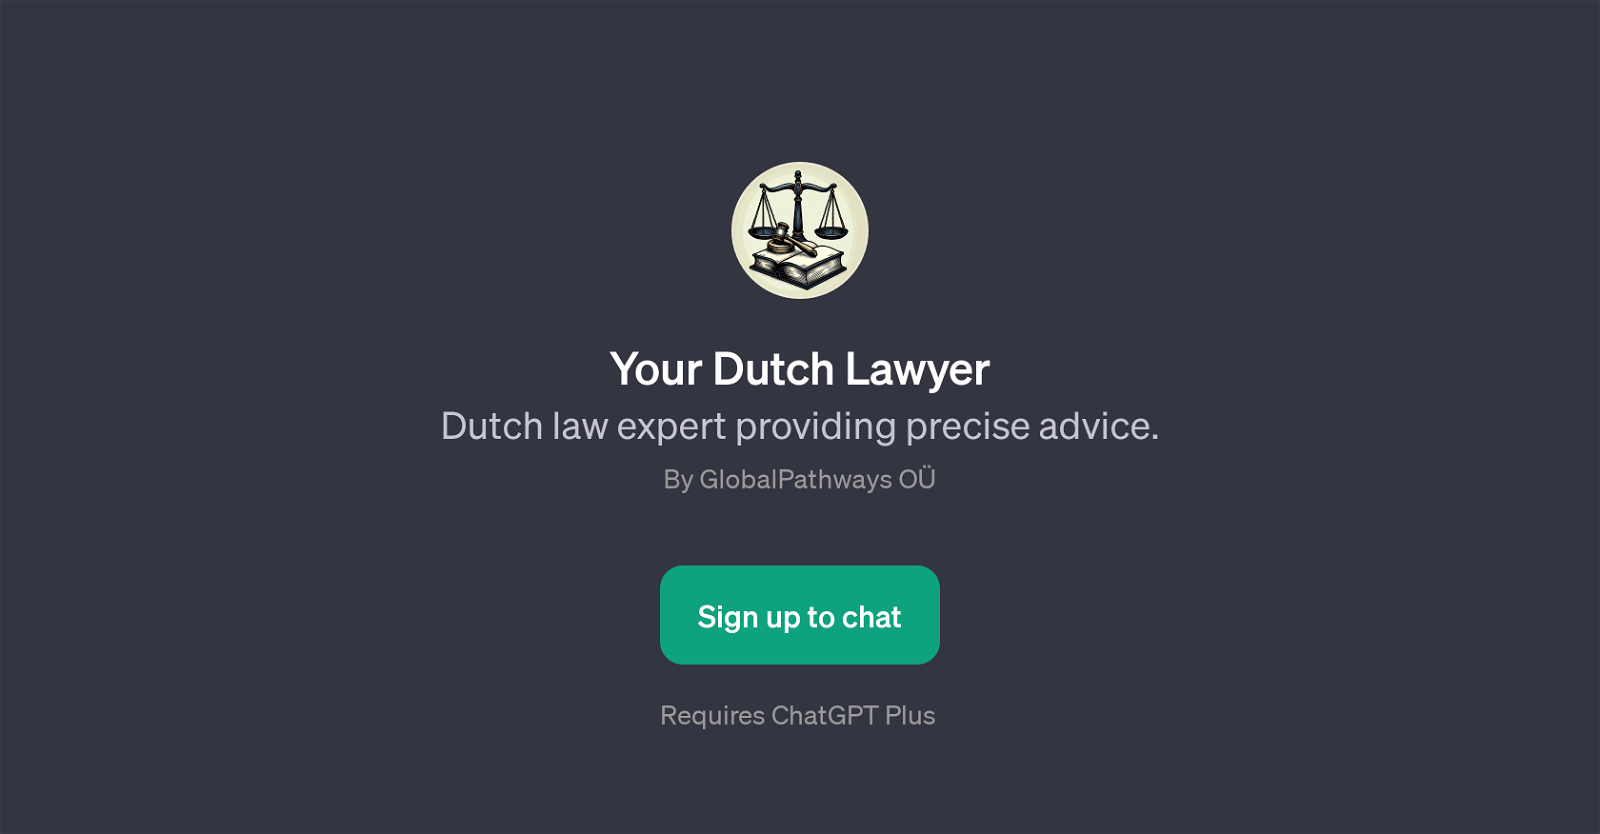 Your Dutch Lawyer website